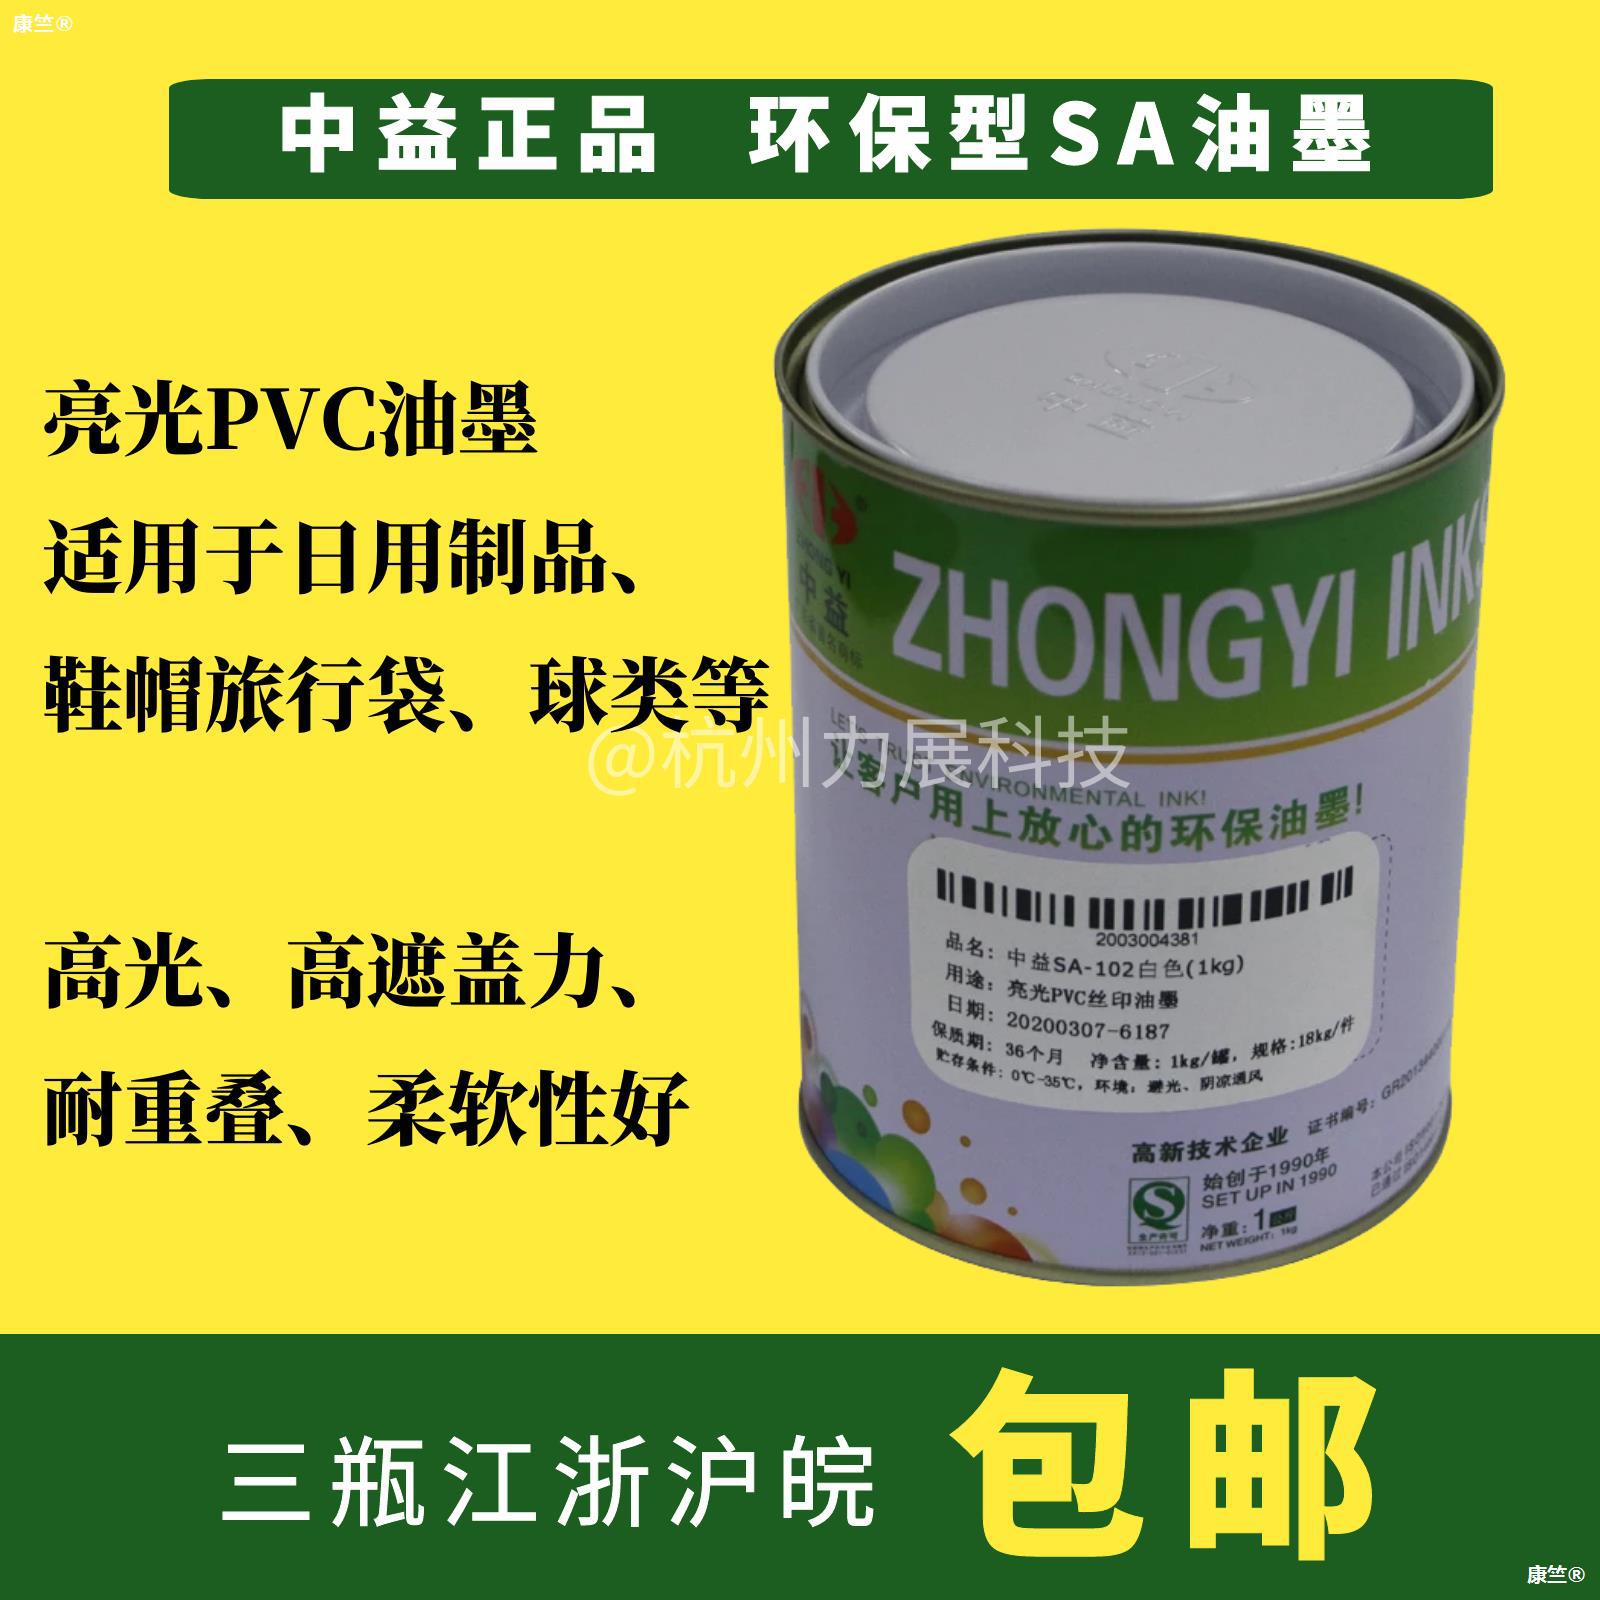 Zhongyi SA high gloss inks PVC Printed paper Timber Leatherwear Screen printing Engraving white black Plastic ink